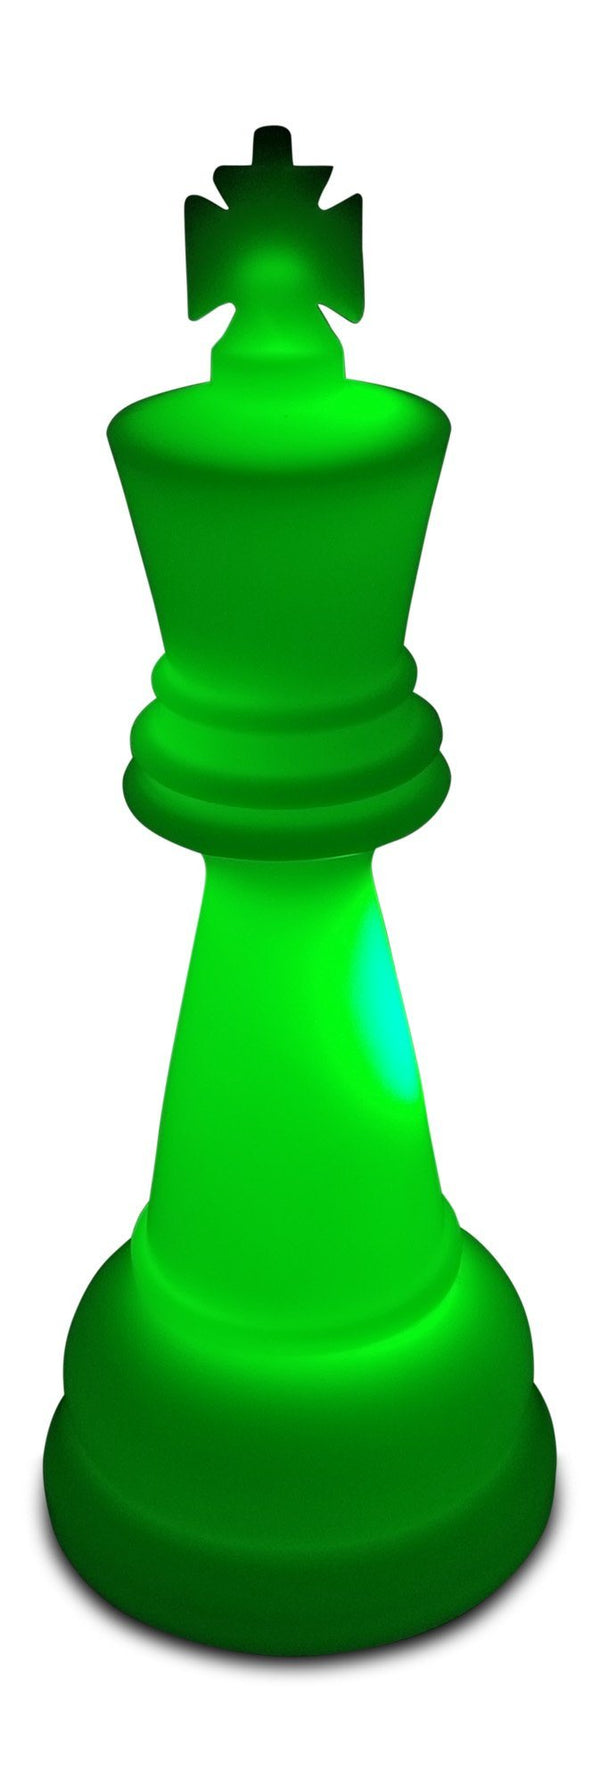 MegaChess 48 Inch Perfect King Light-Up Giant Chess Piece - Green |  | MegaChess.com